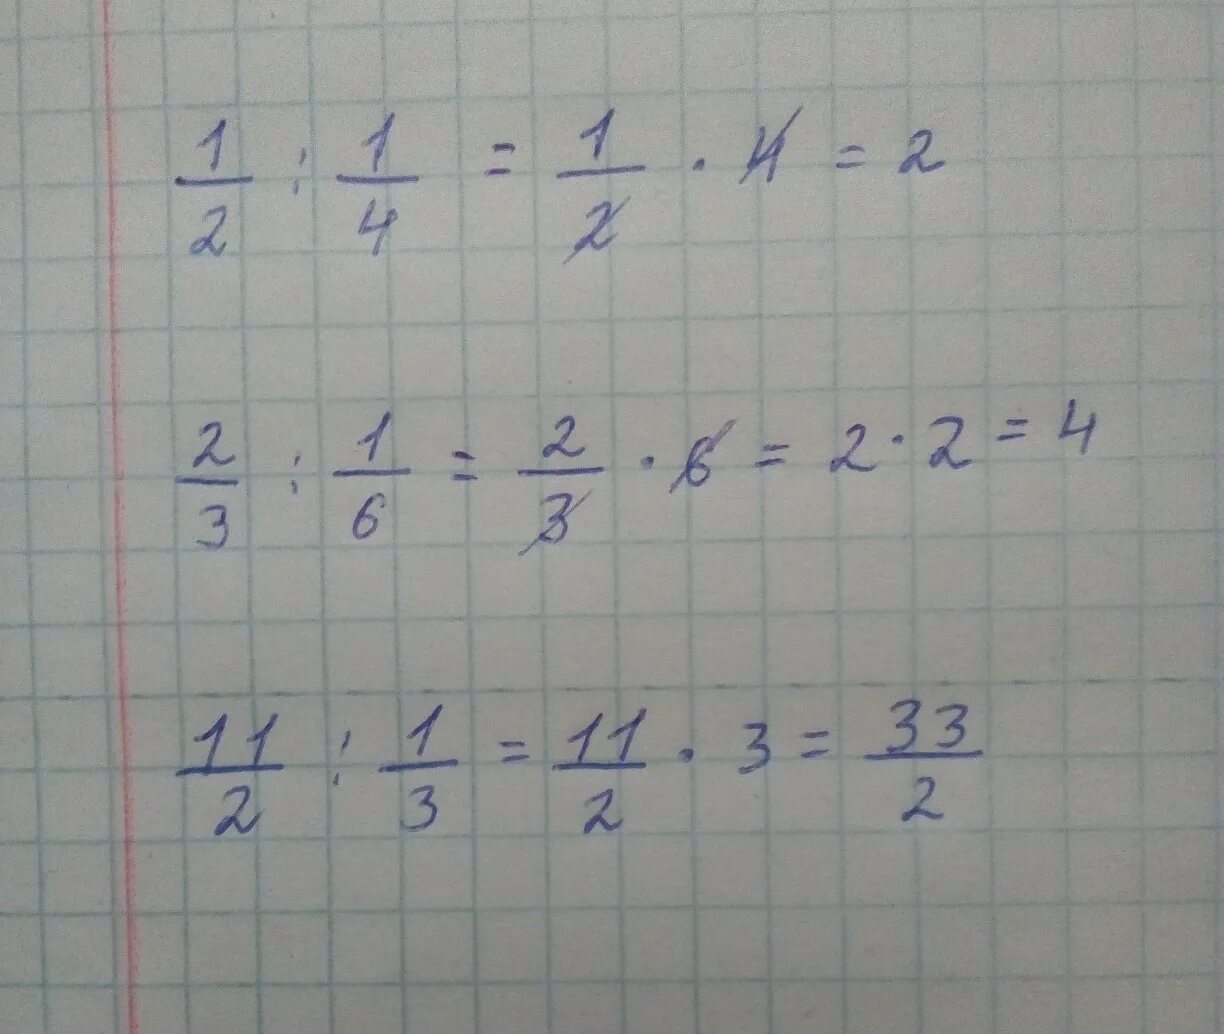 3 1 3 1 1 20х. (1/2-1/3):(1/3-1/4)*(3/2). (2 1/2+3 1/3)*6. (1/2-1/3):(1/3-1/4)*(3/2)=Пошагово. 2 2/3×3,5÷ 3 1/3.